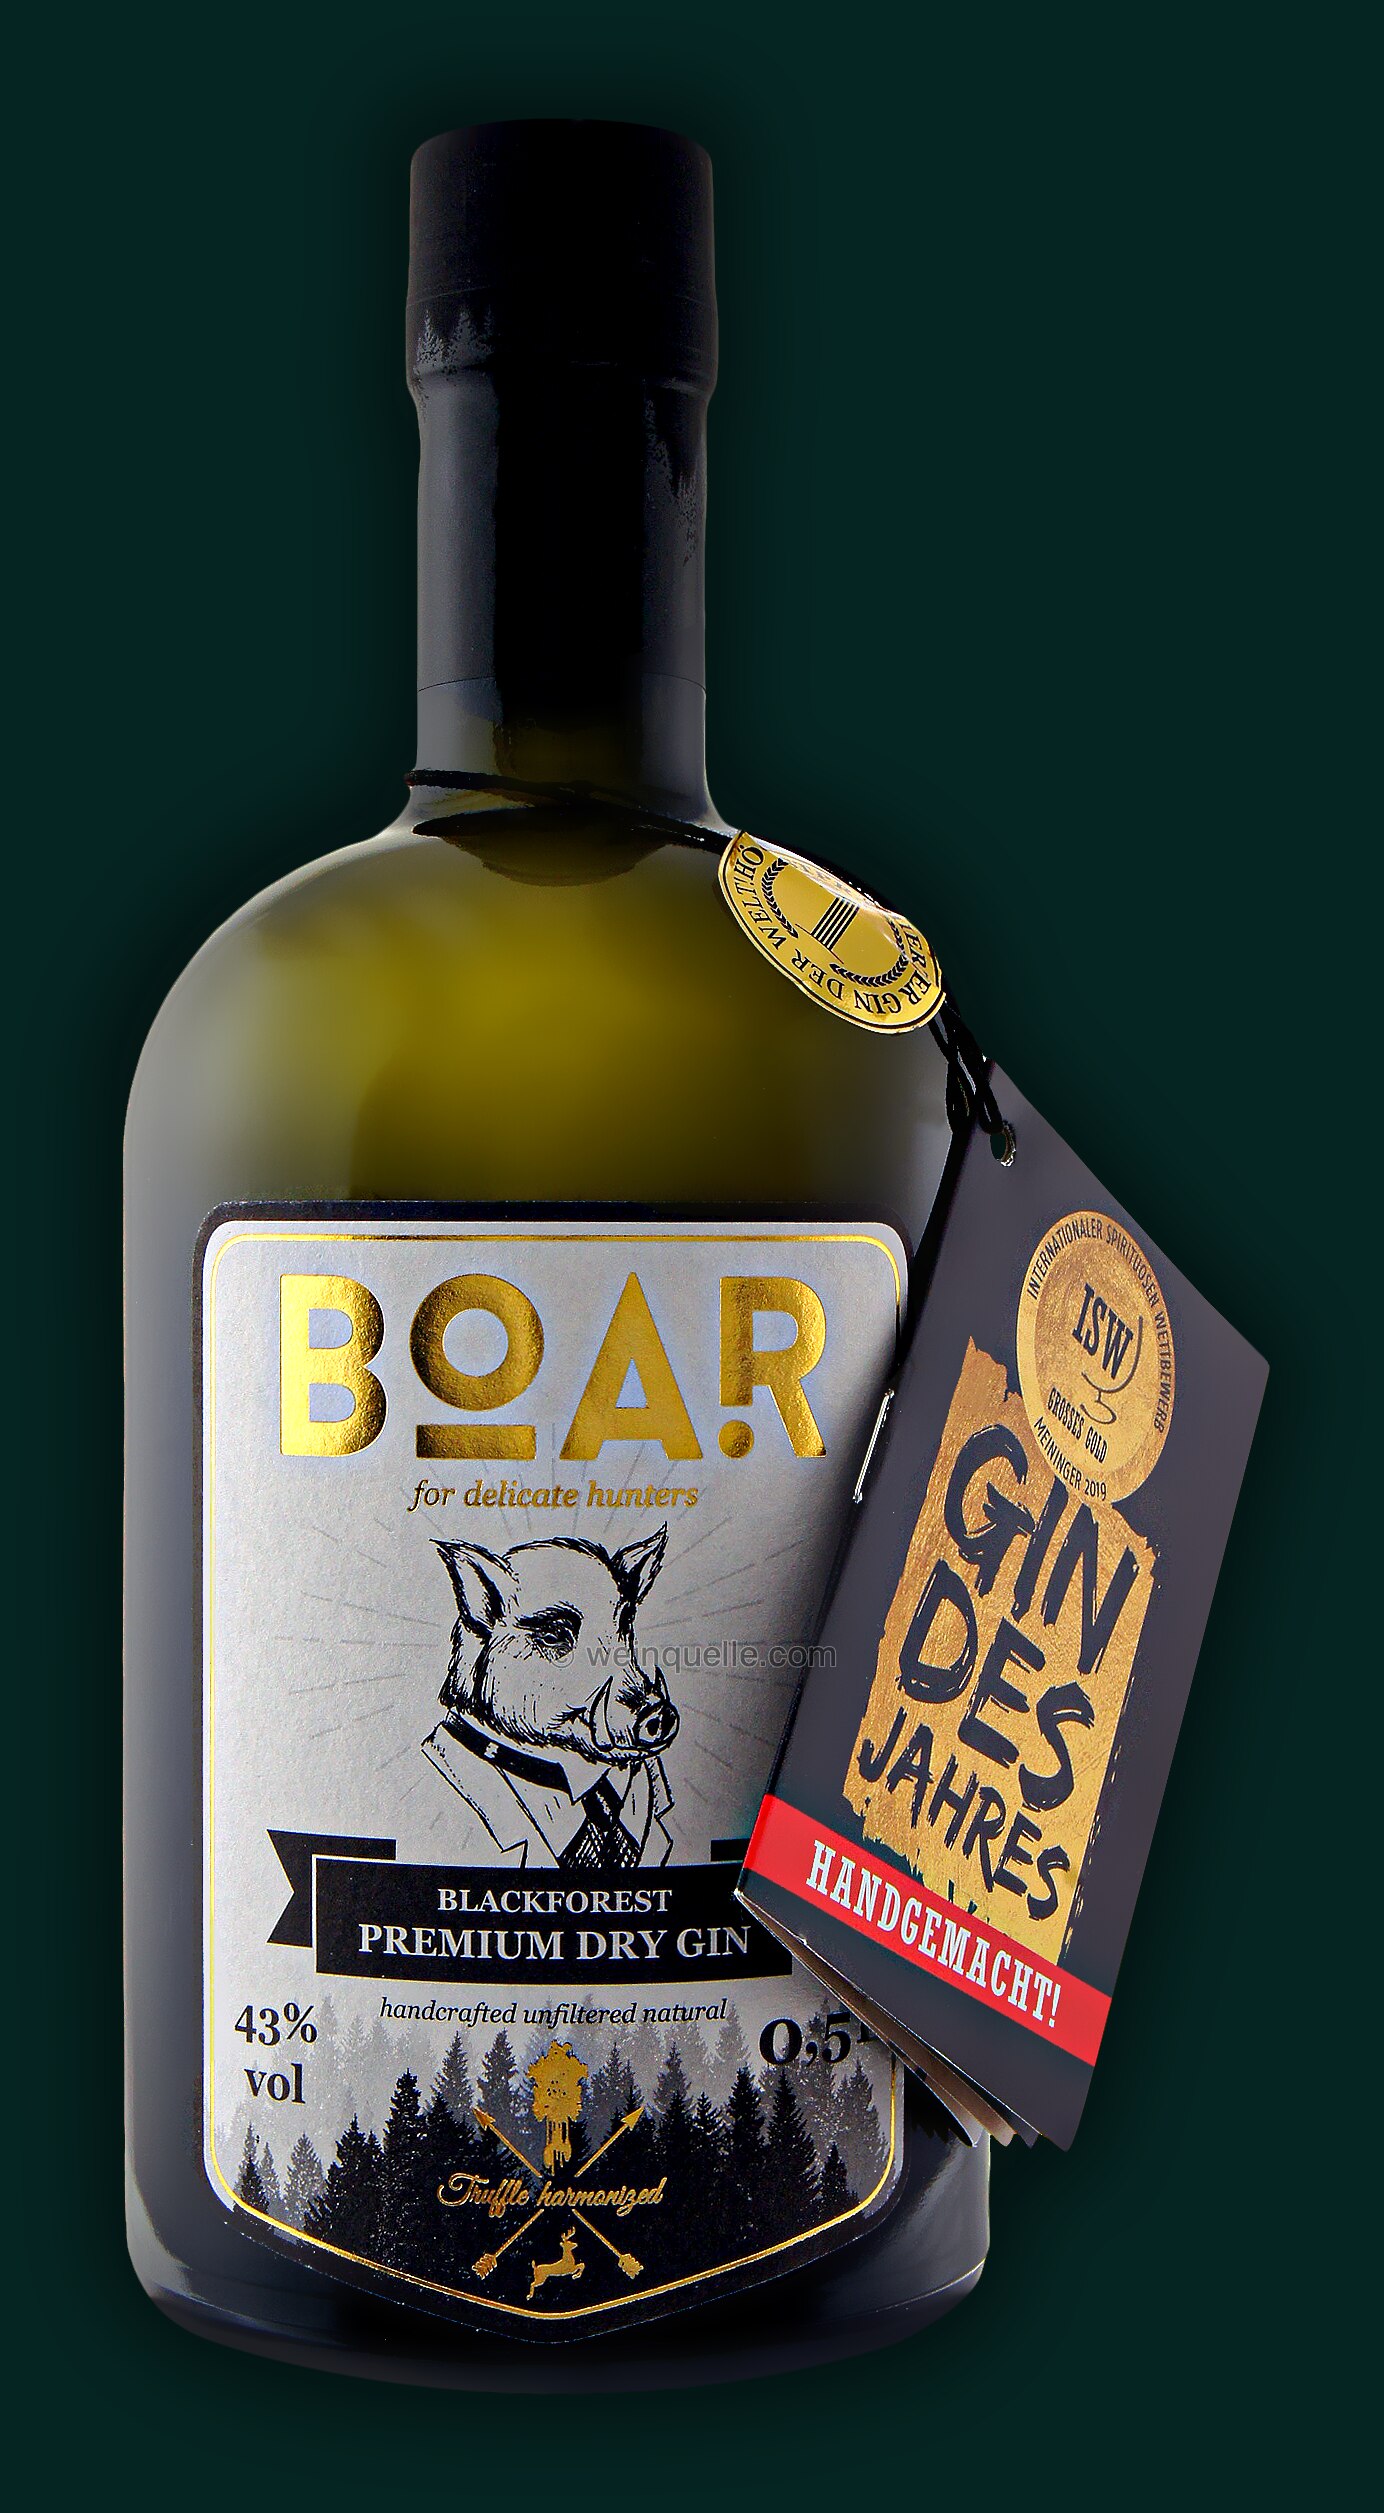 Boar Black Forest Premium Dry 43%, - Lühmann € Gin Weinquelle 34,90